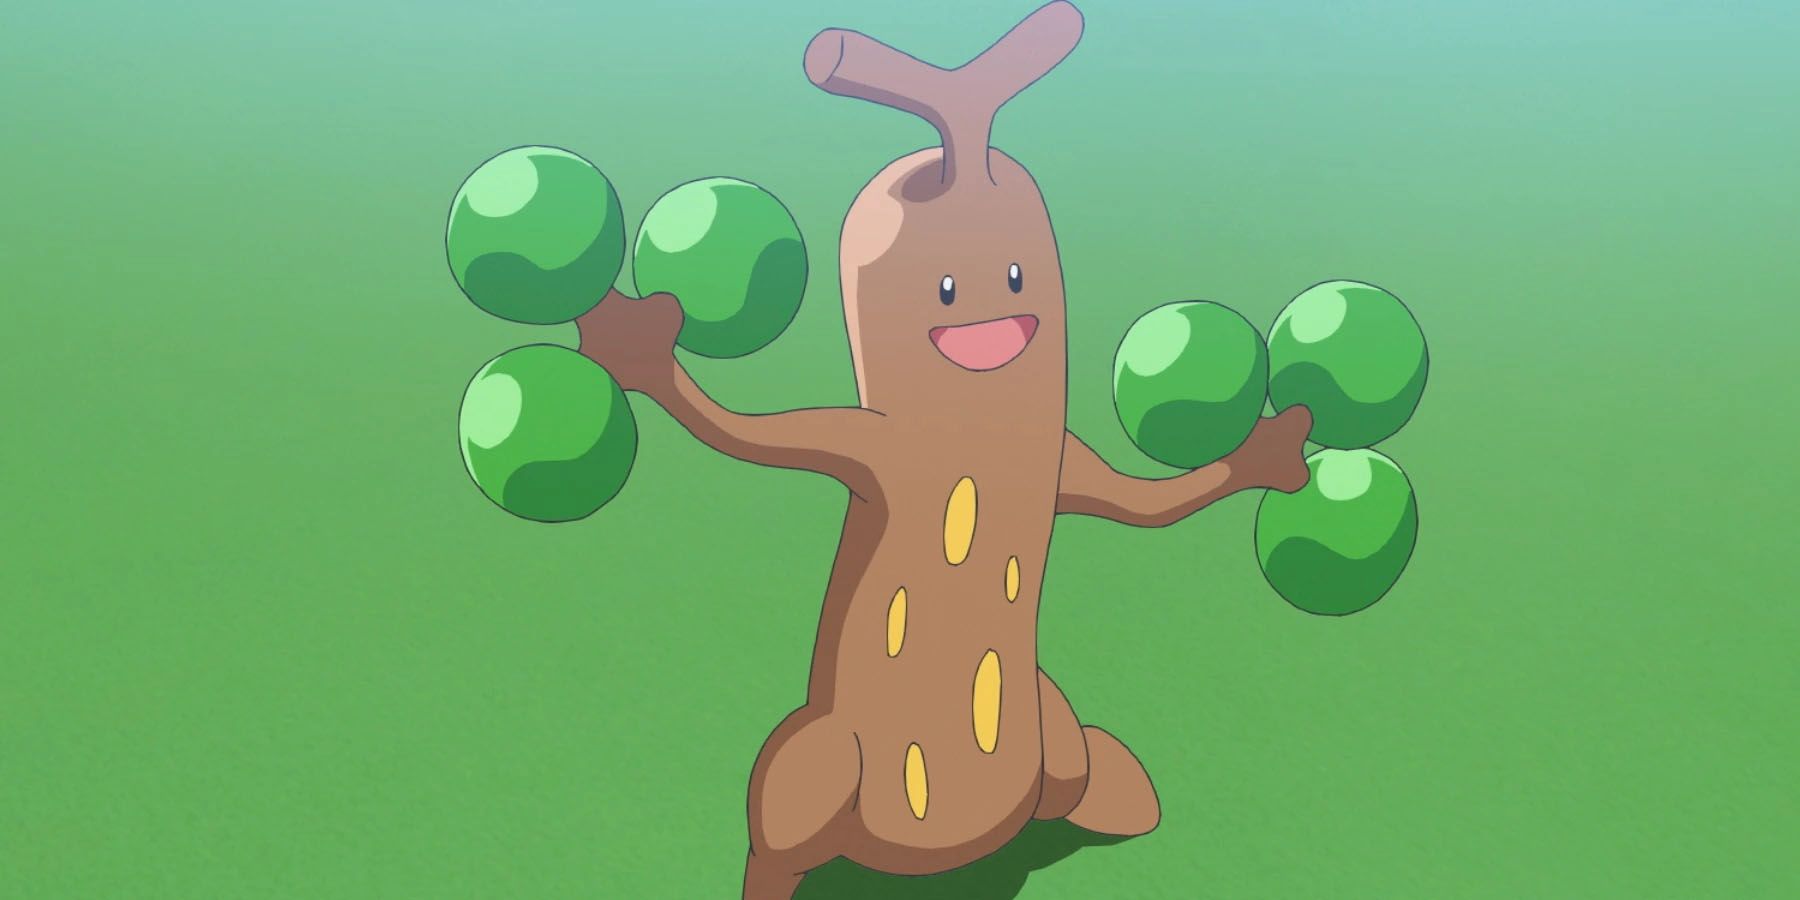 A screenshot of a Sudowoodo standing in a grassy green field in the Pokemon anime.